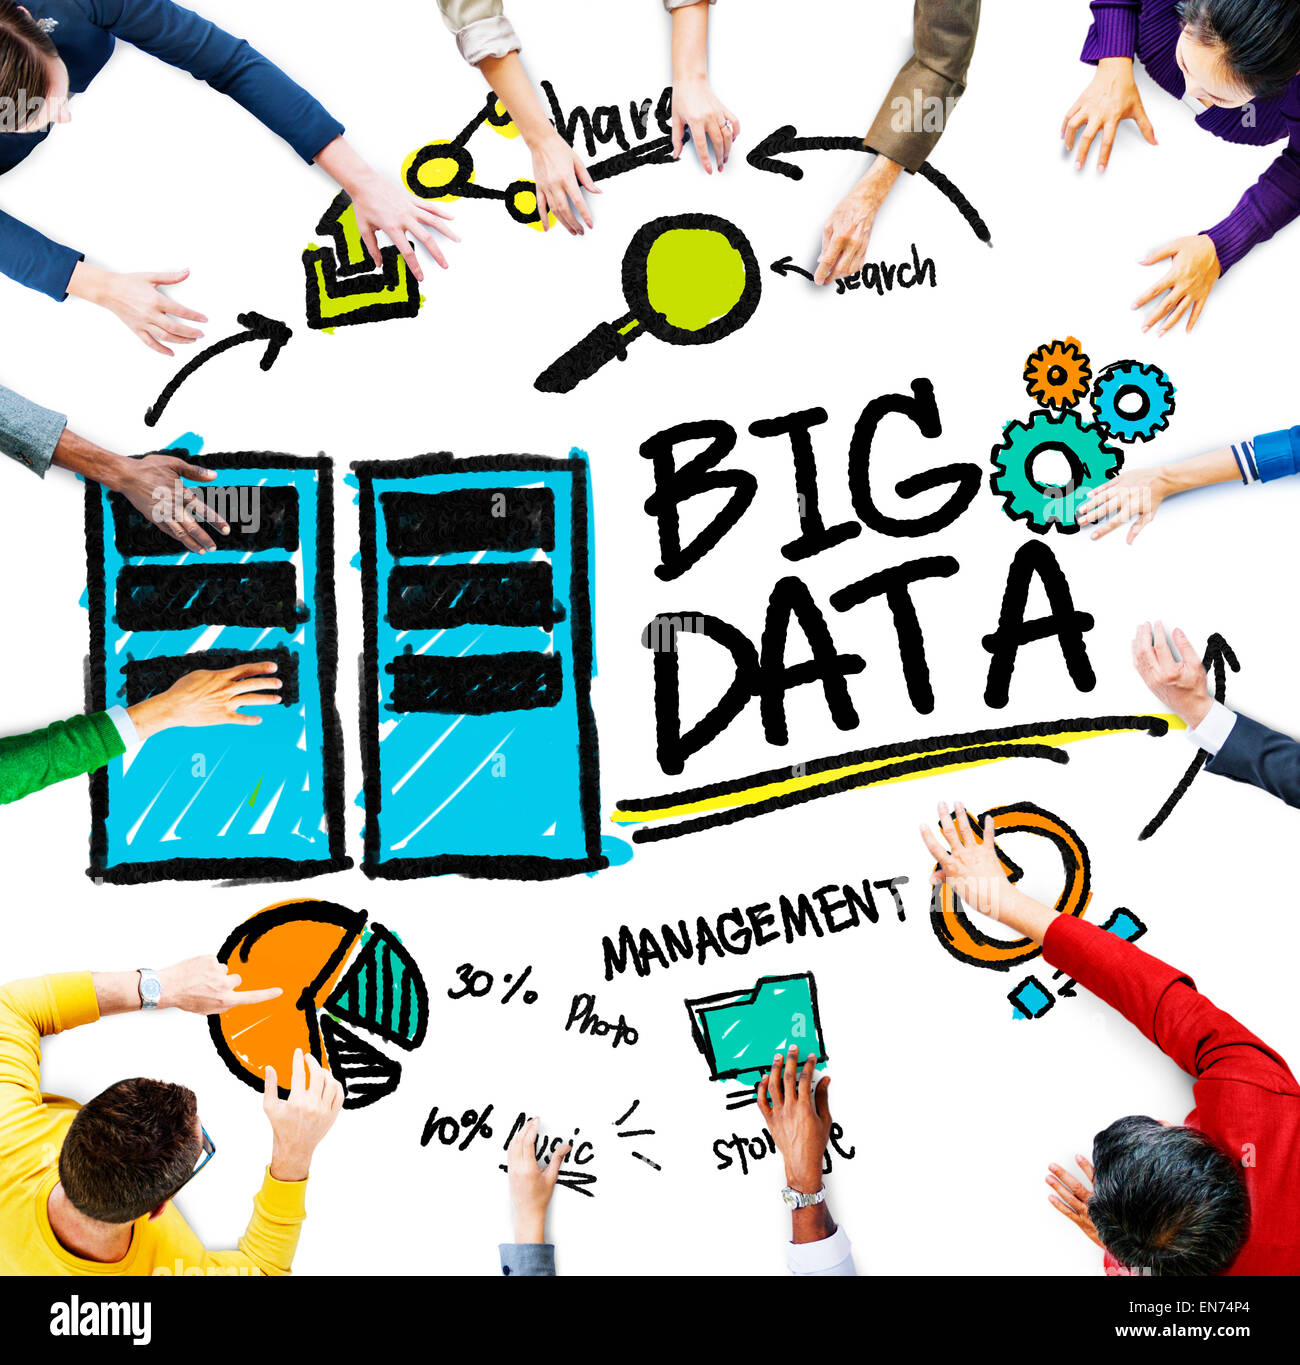 Diversity People Big Data Management Teamwork Discussion Concept Stock Photo